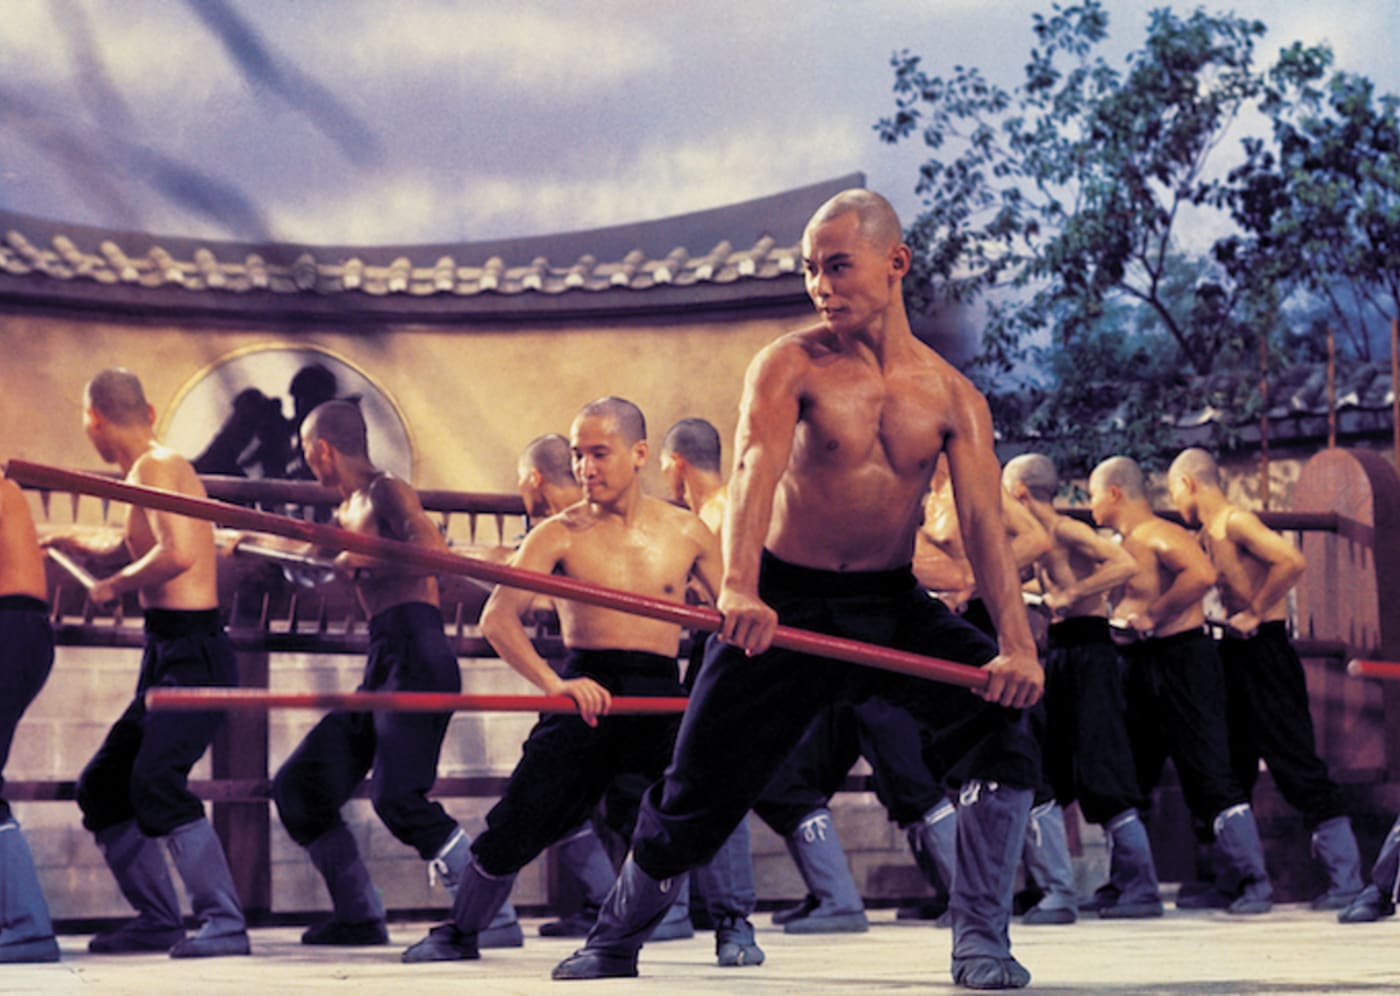 36 Chamber of Shaolin